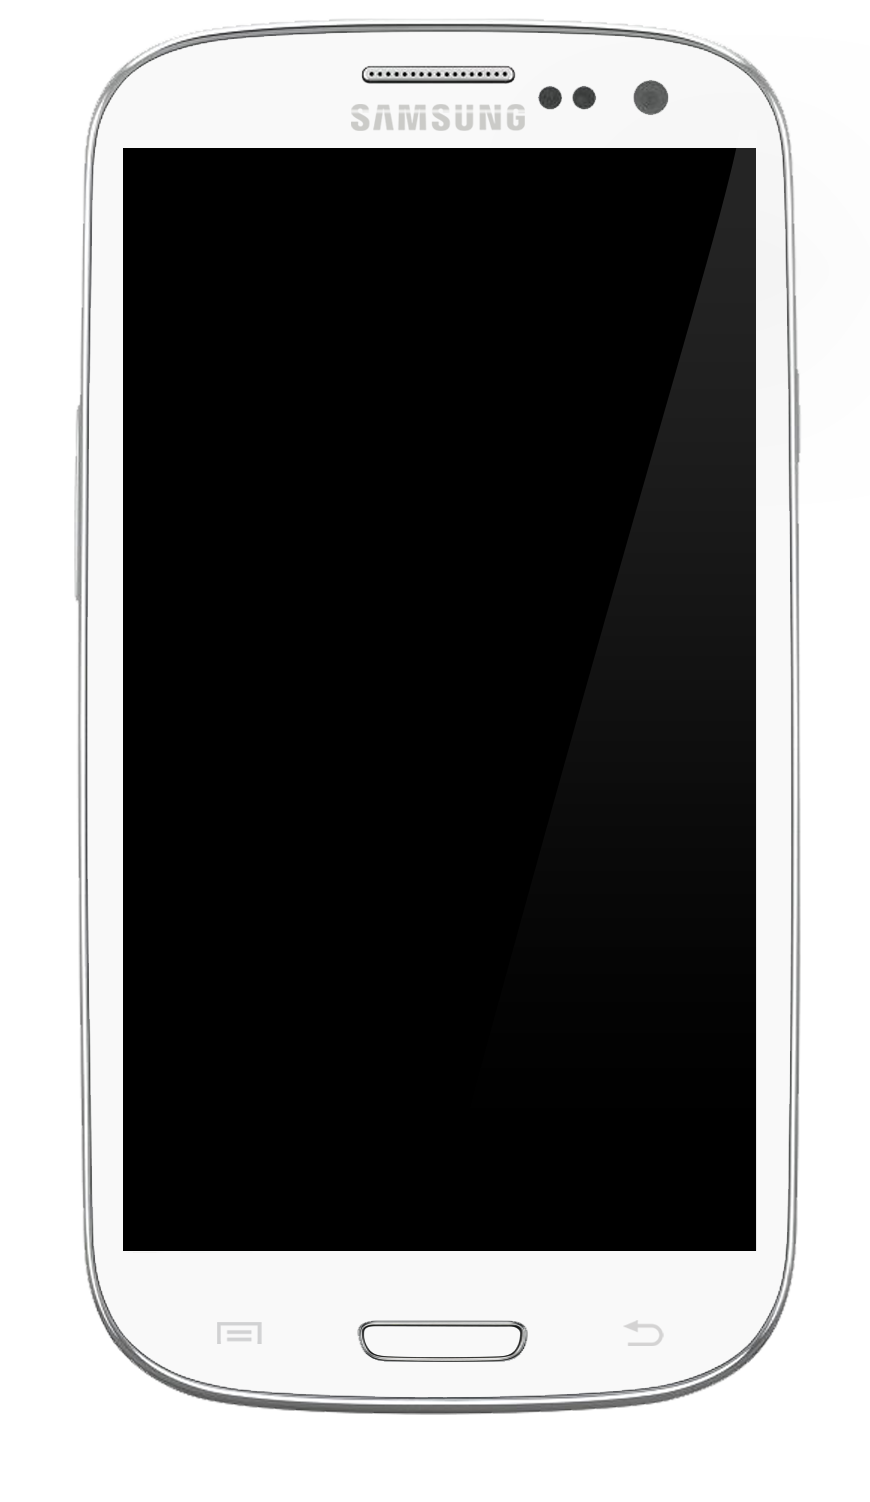 Samsung Galaxy S3 by gadguy